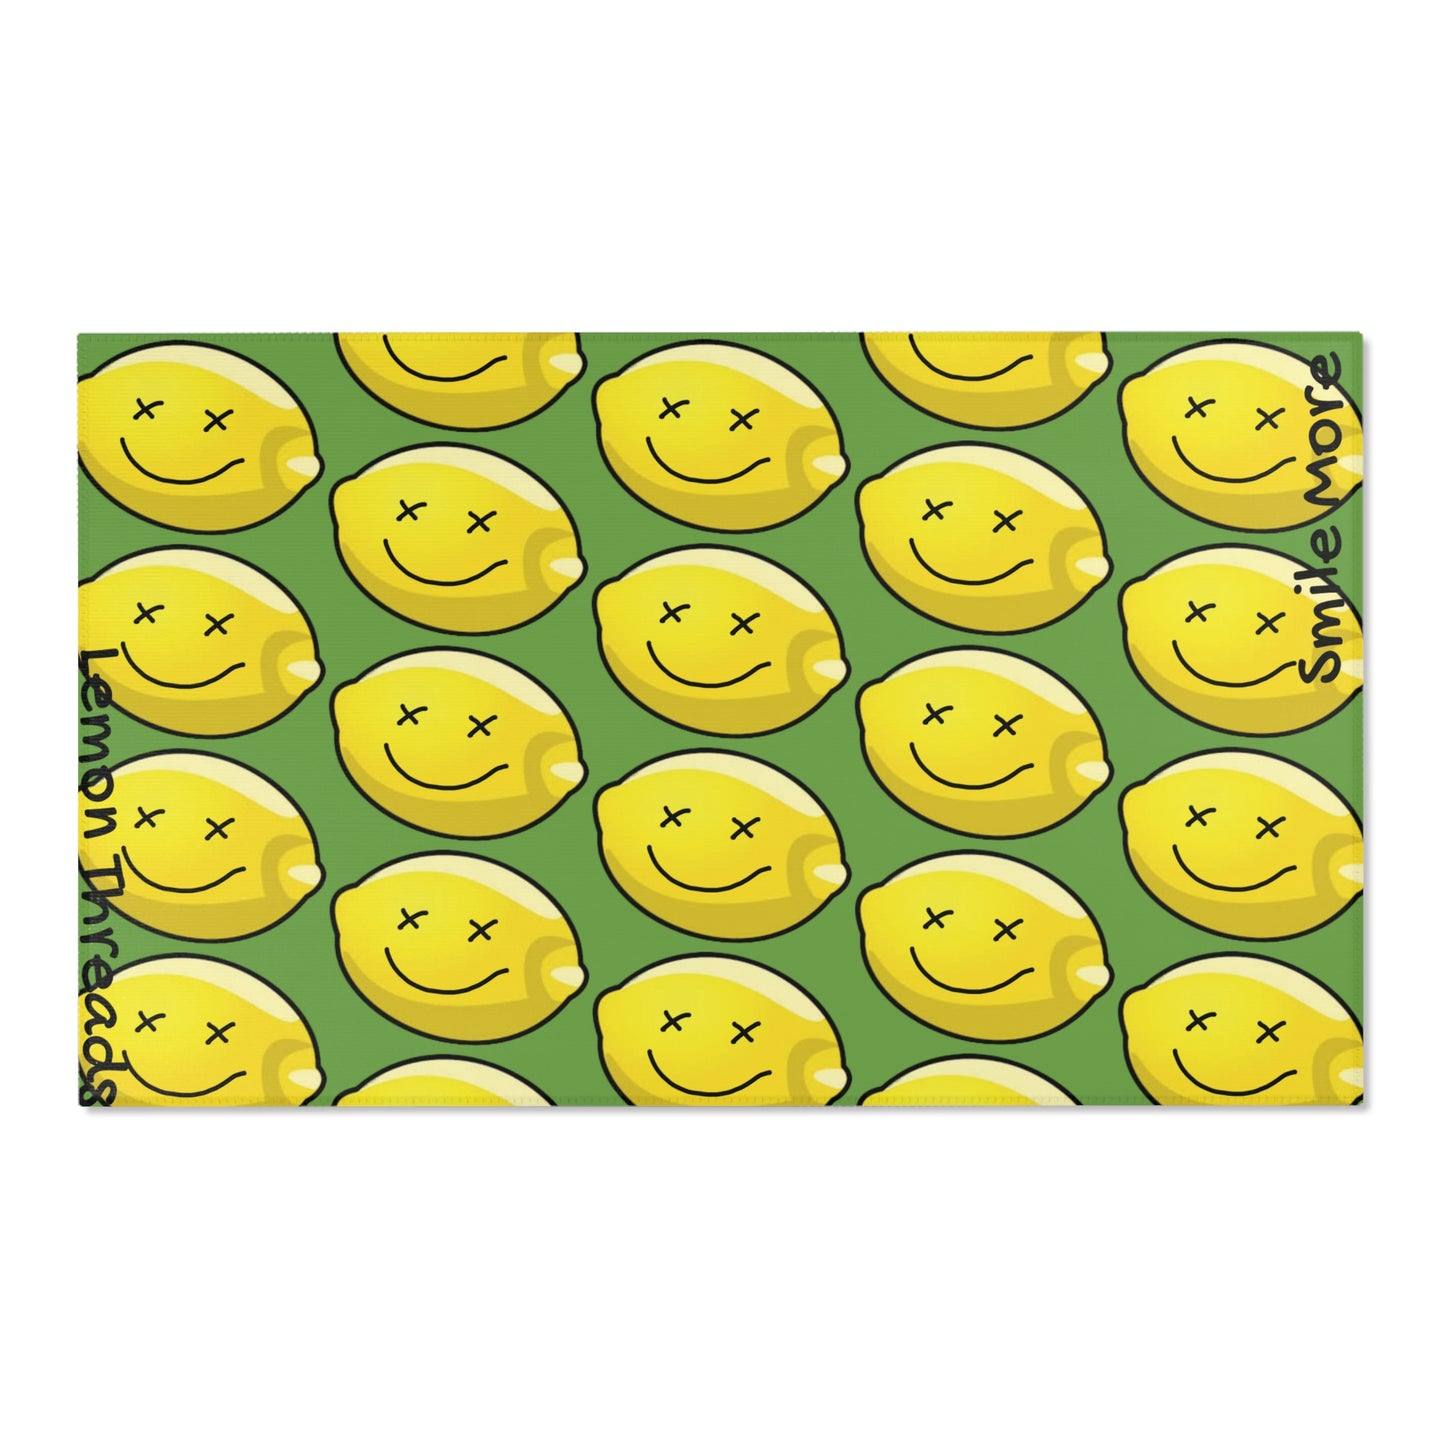 Lemon Threads "Smile More" Area Rug